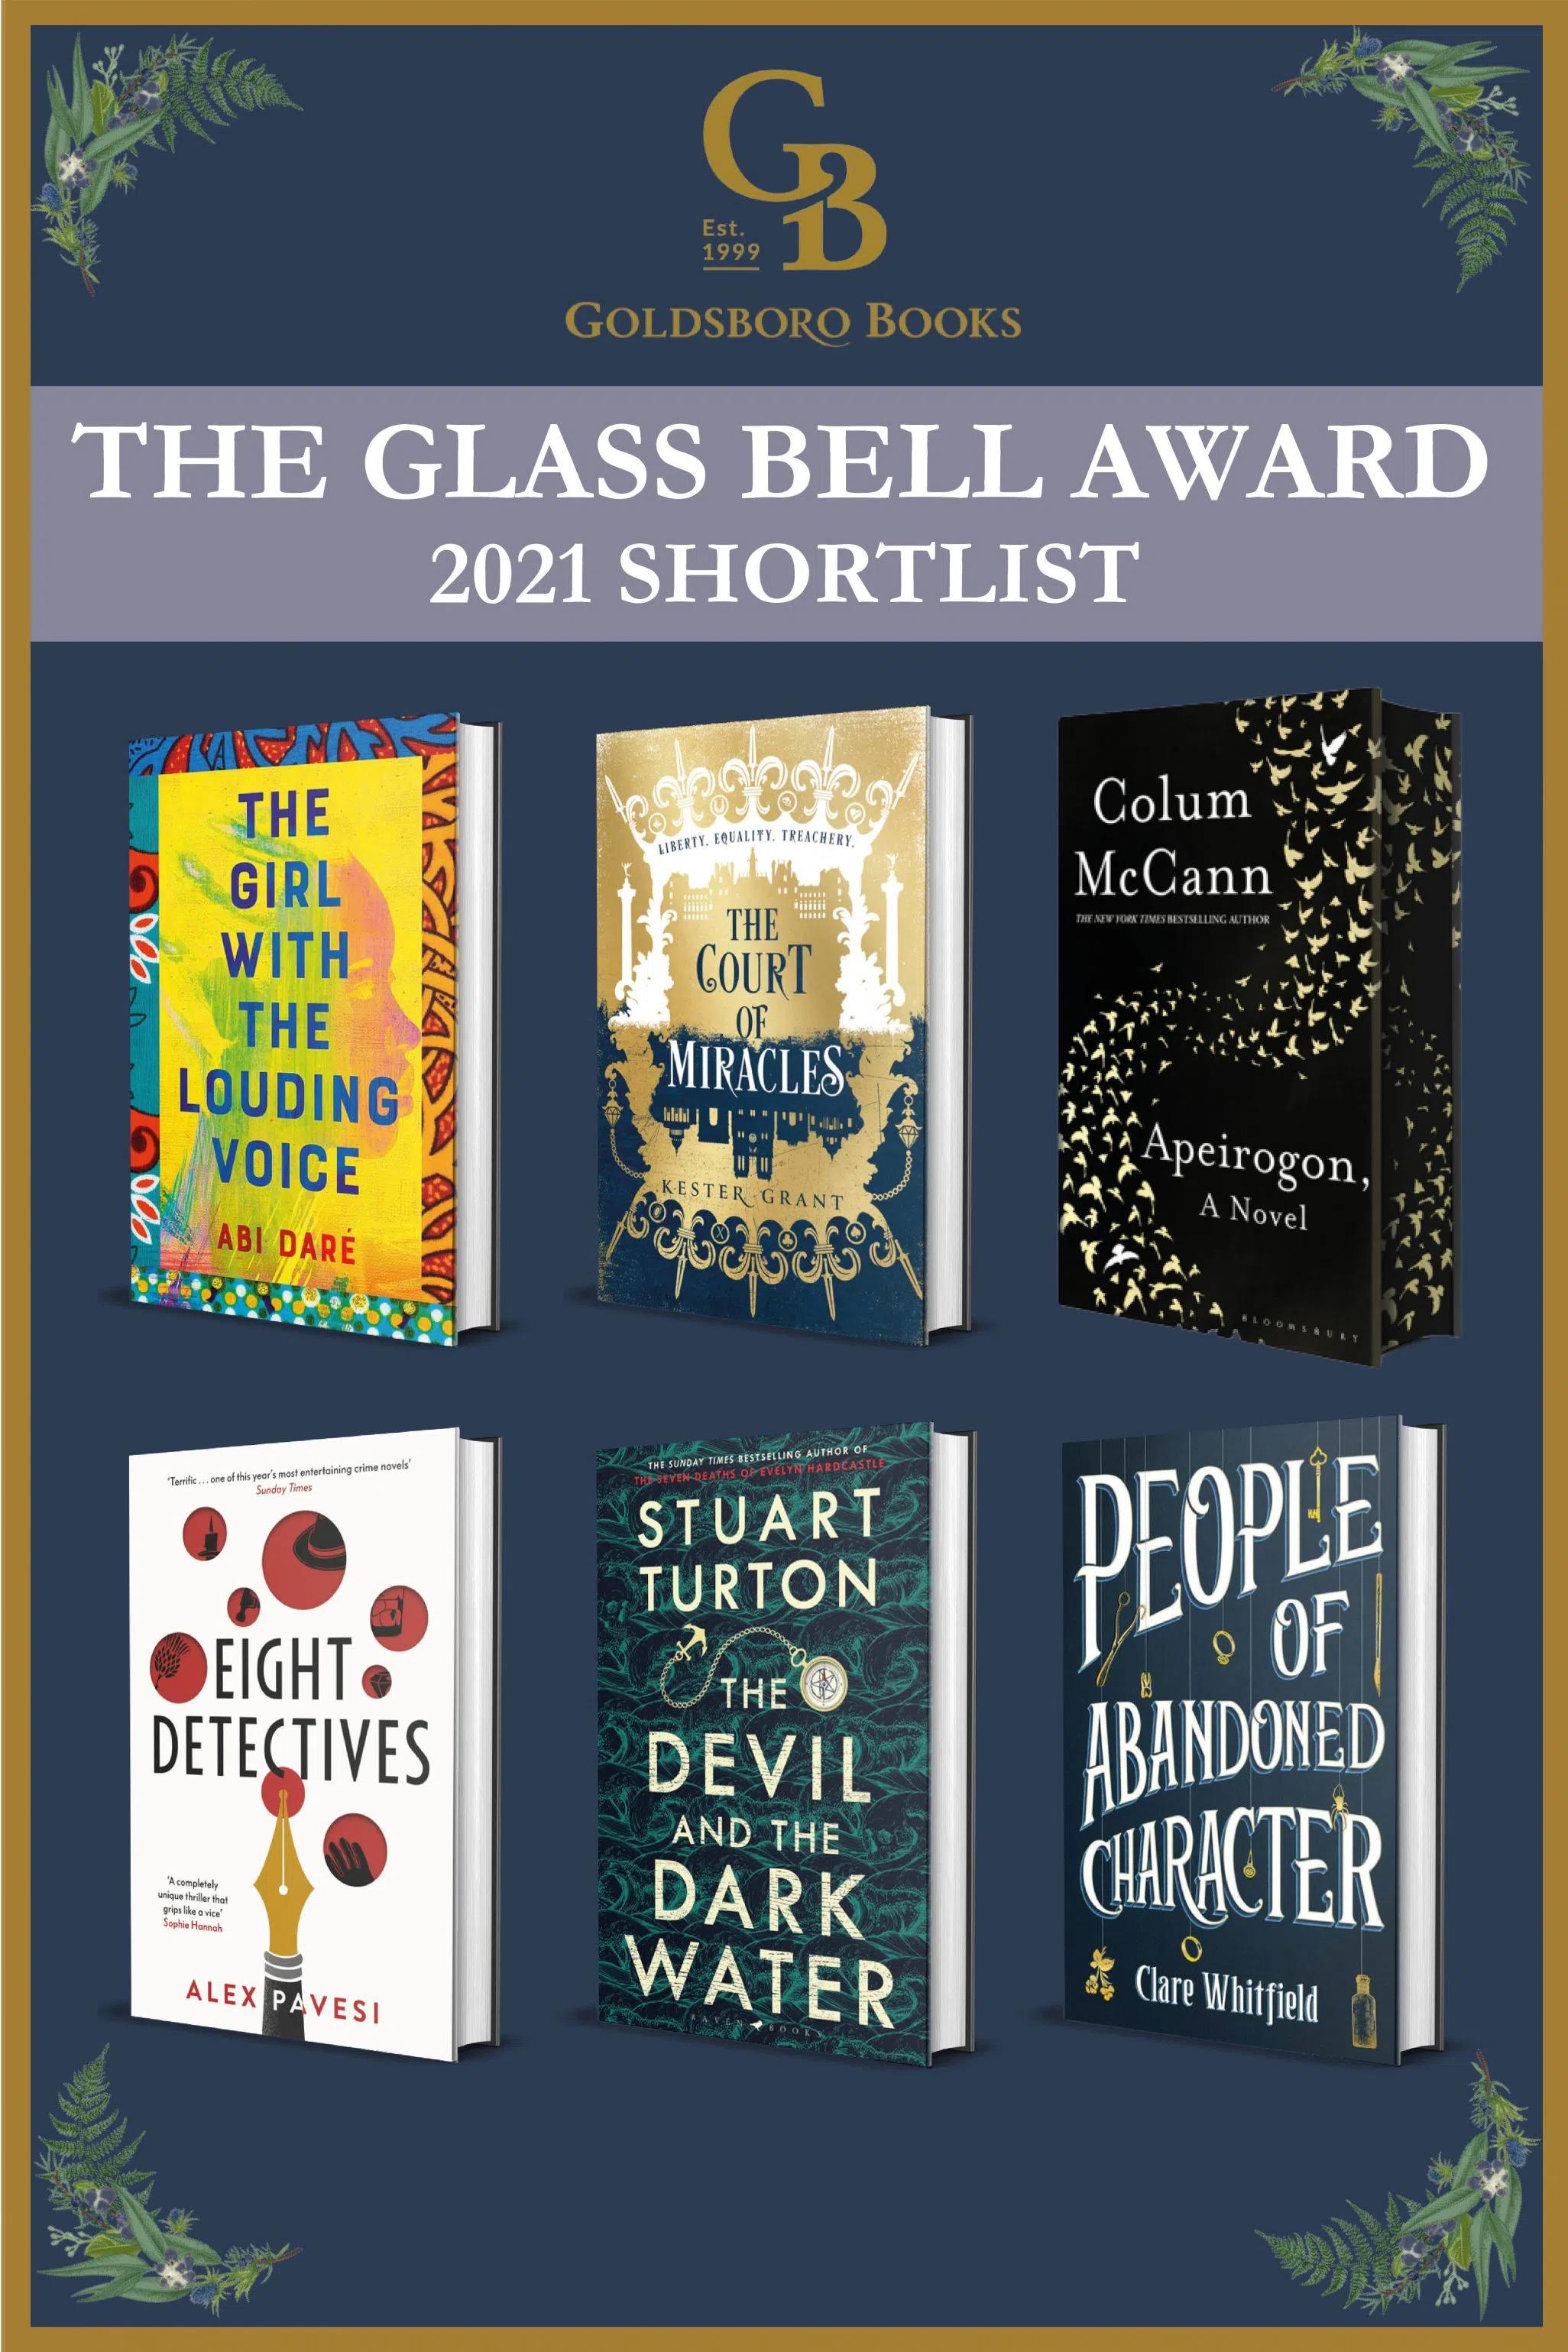 Изображение к статье Объявлен шорт-лист премии Goldsboro Books Glass Bell Award 2021